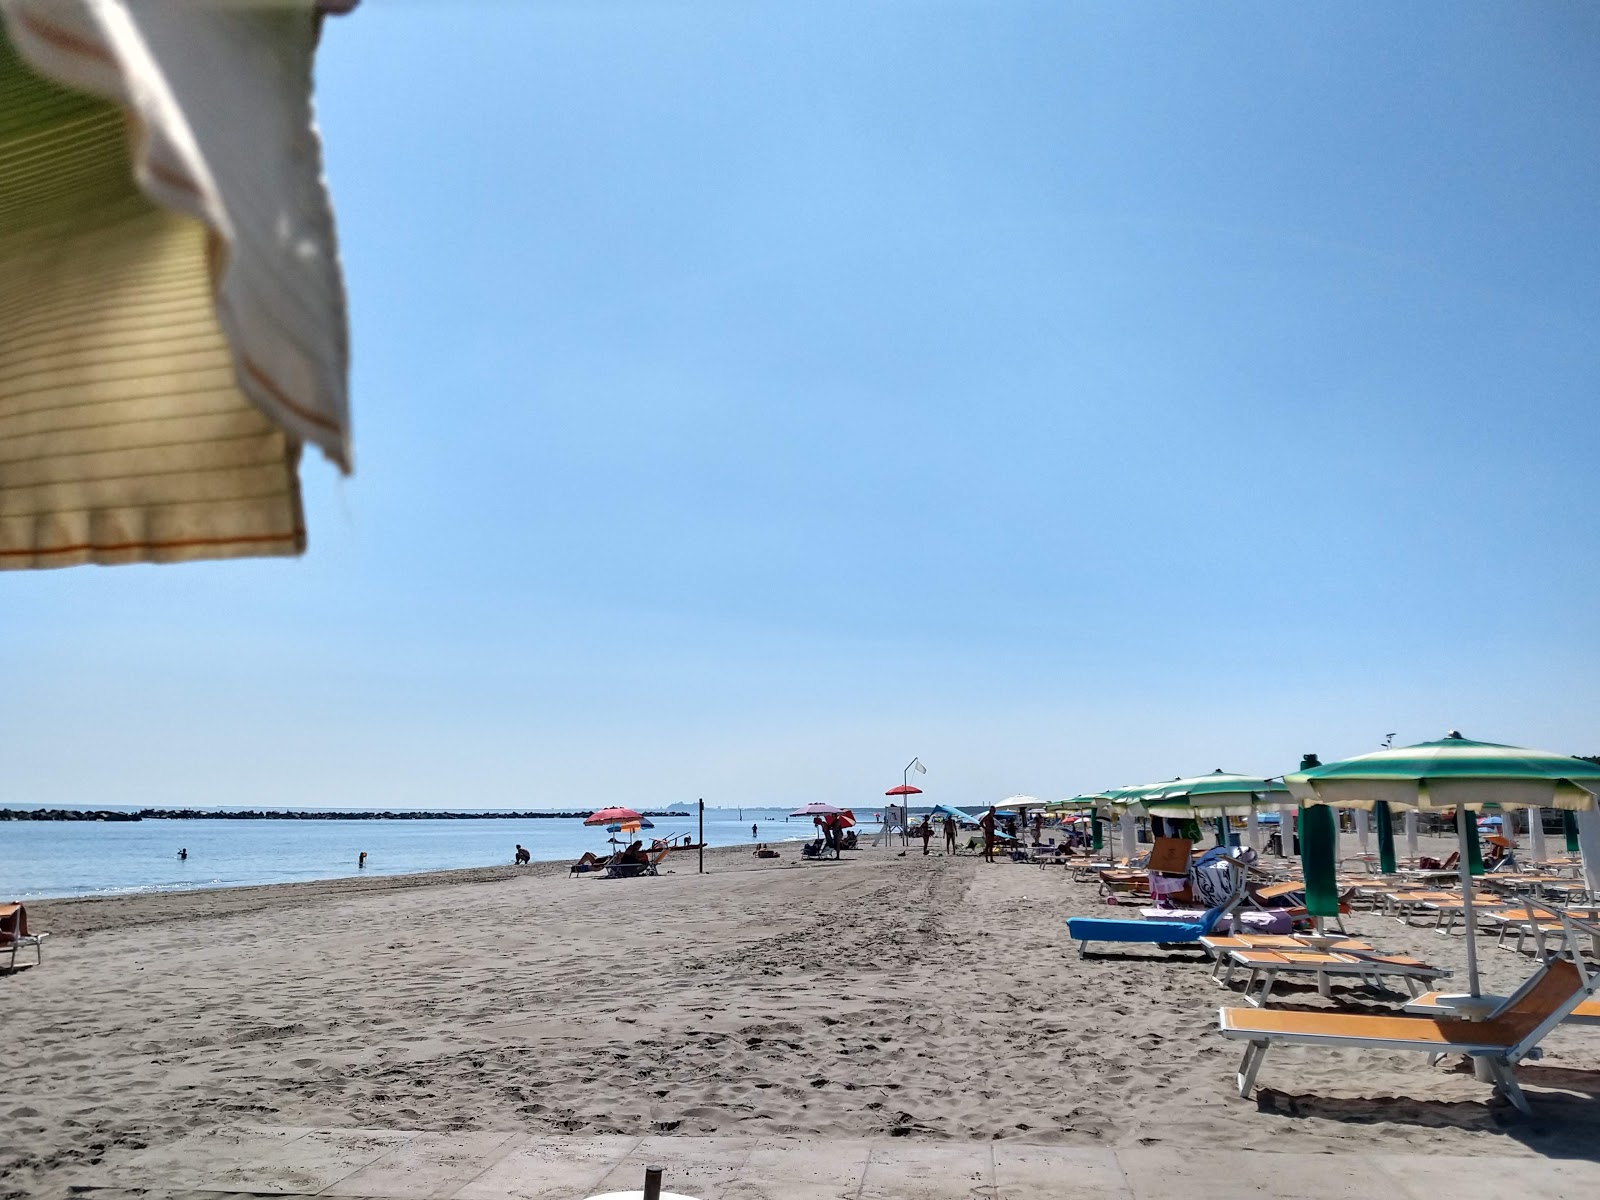 Photo of Casal Borsetti beach resort area